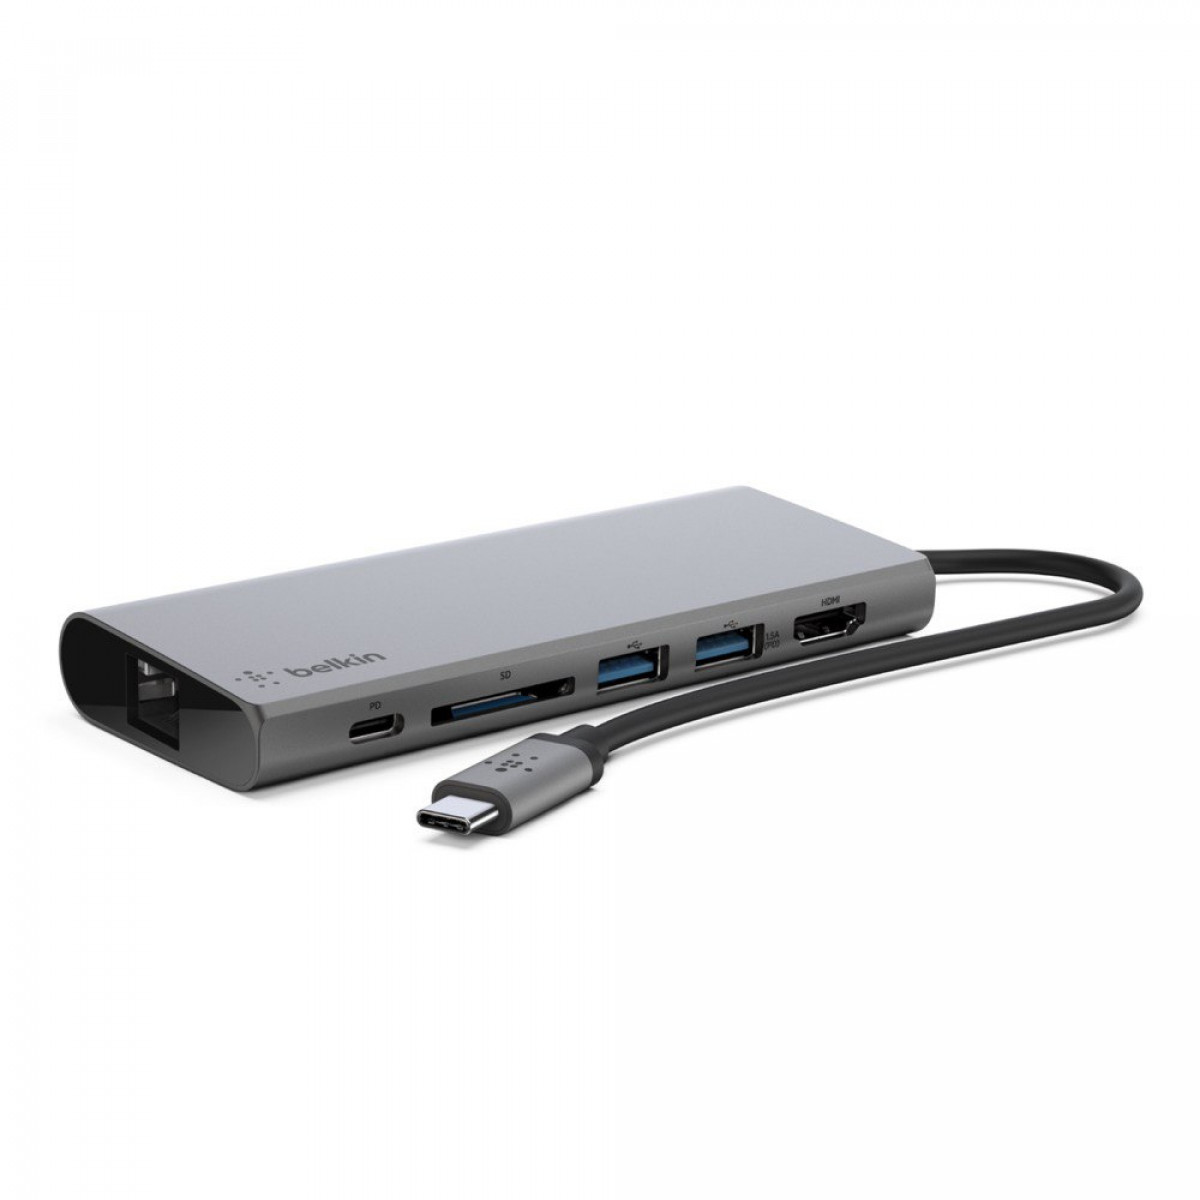 Адаптер Belkin многопортовый USB-C 7 в 1, Серый